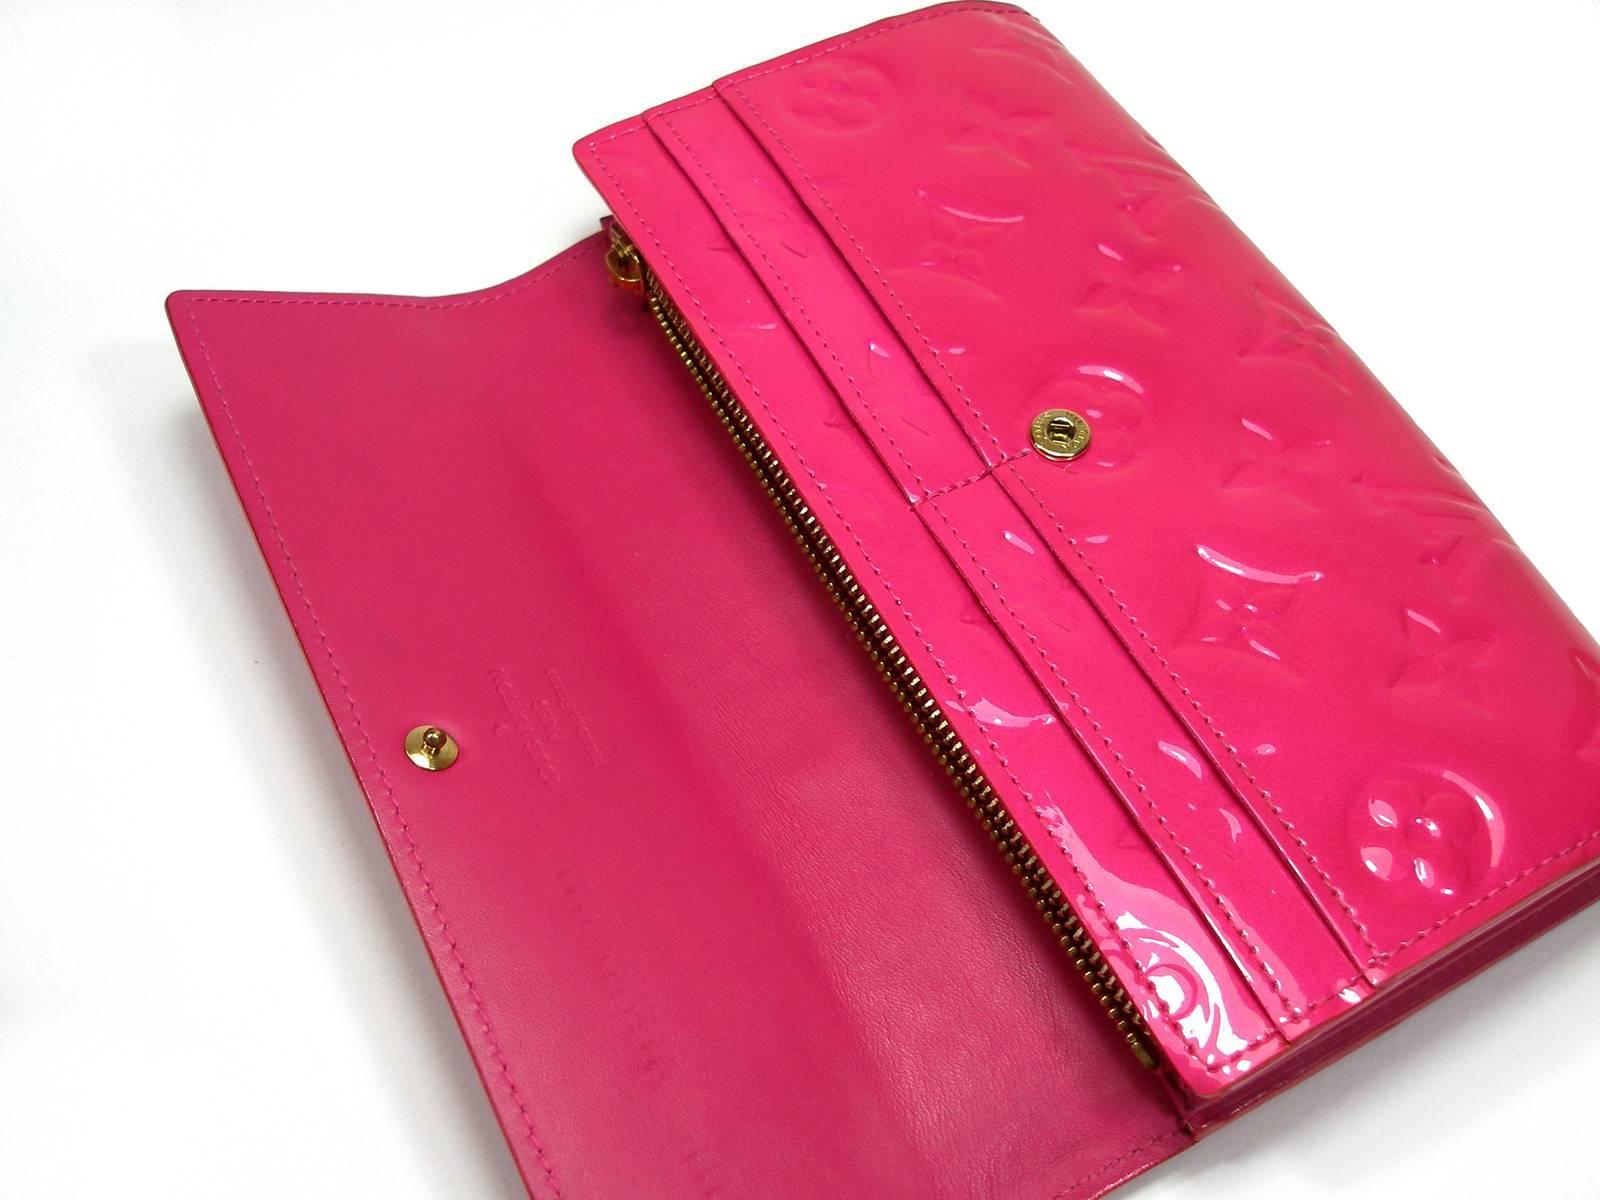  Louis Vuitton Vernis Sarah Wallet Monogram Vernis Rose Pink / Good Condition  5